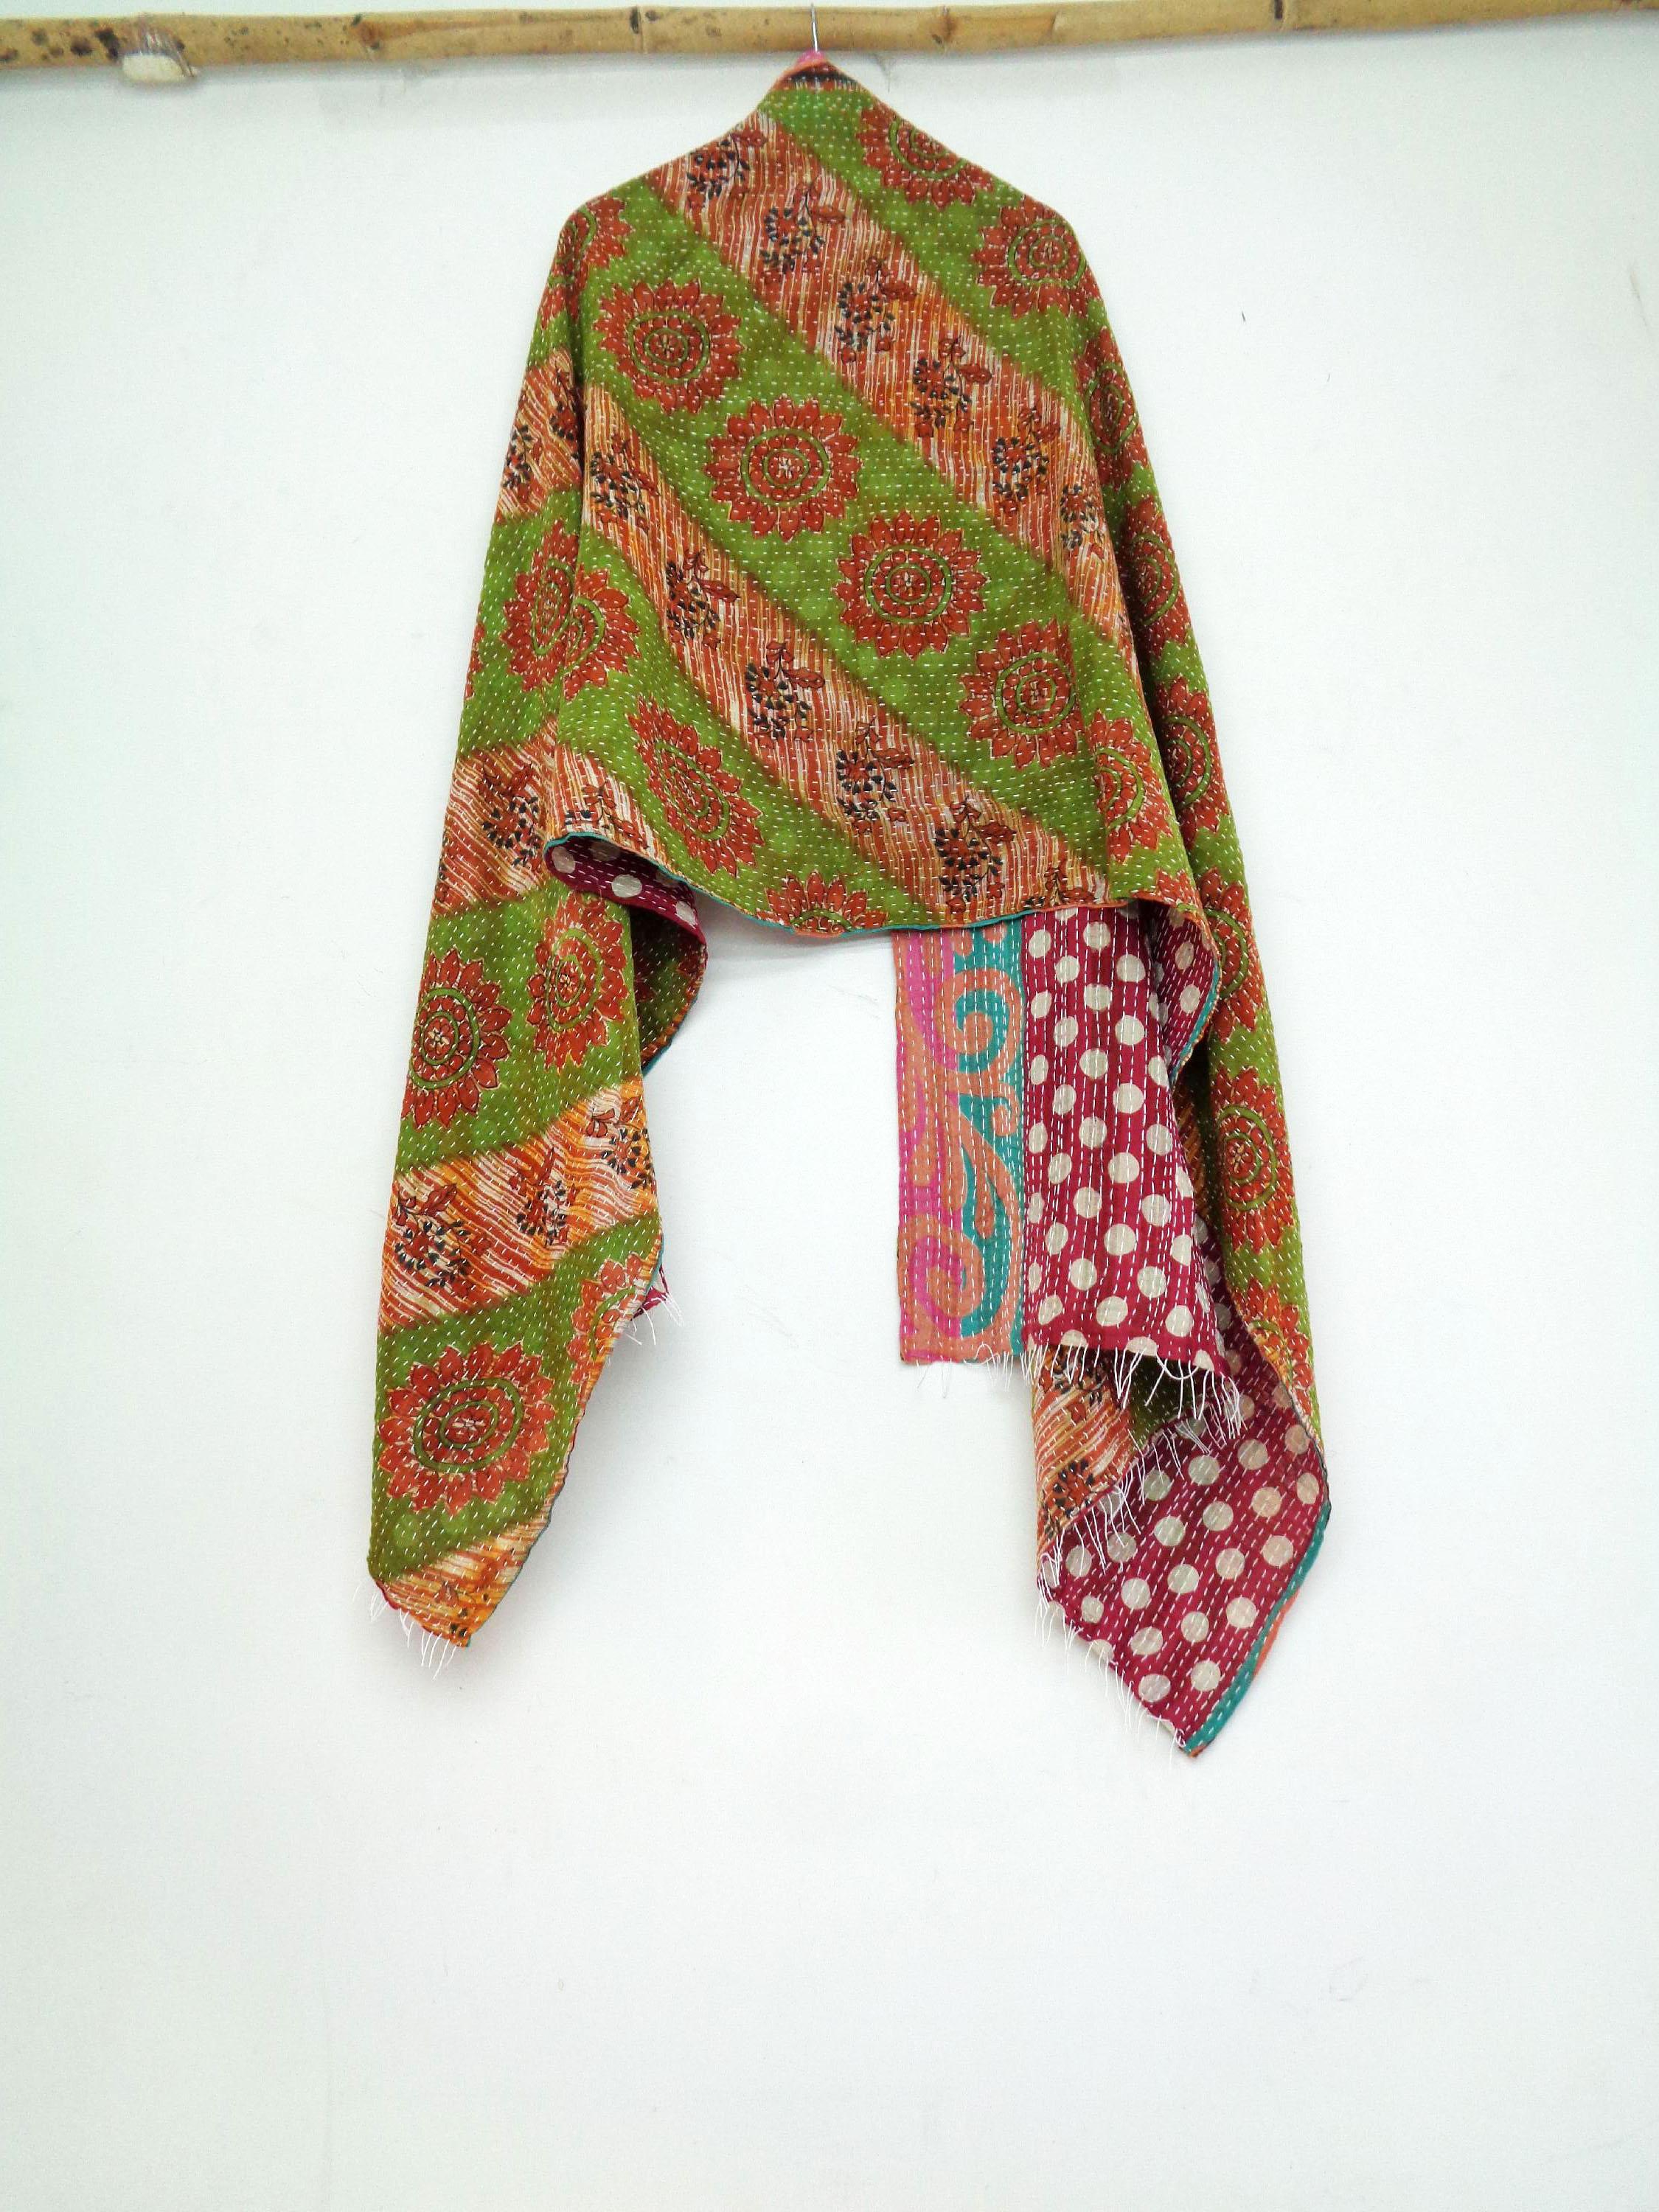 Handmade Indian Cotton Vintage Kantha Scarf Sari Shawl Scarves Stole Neck Wrap SW72